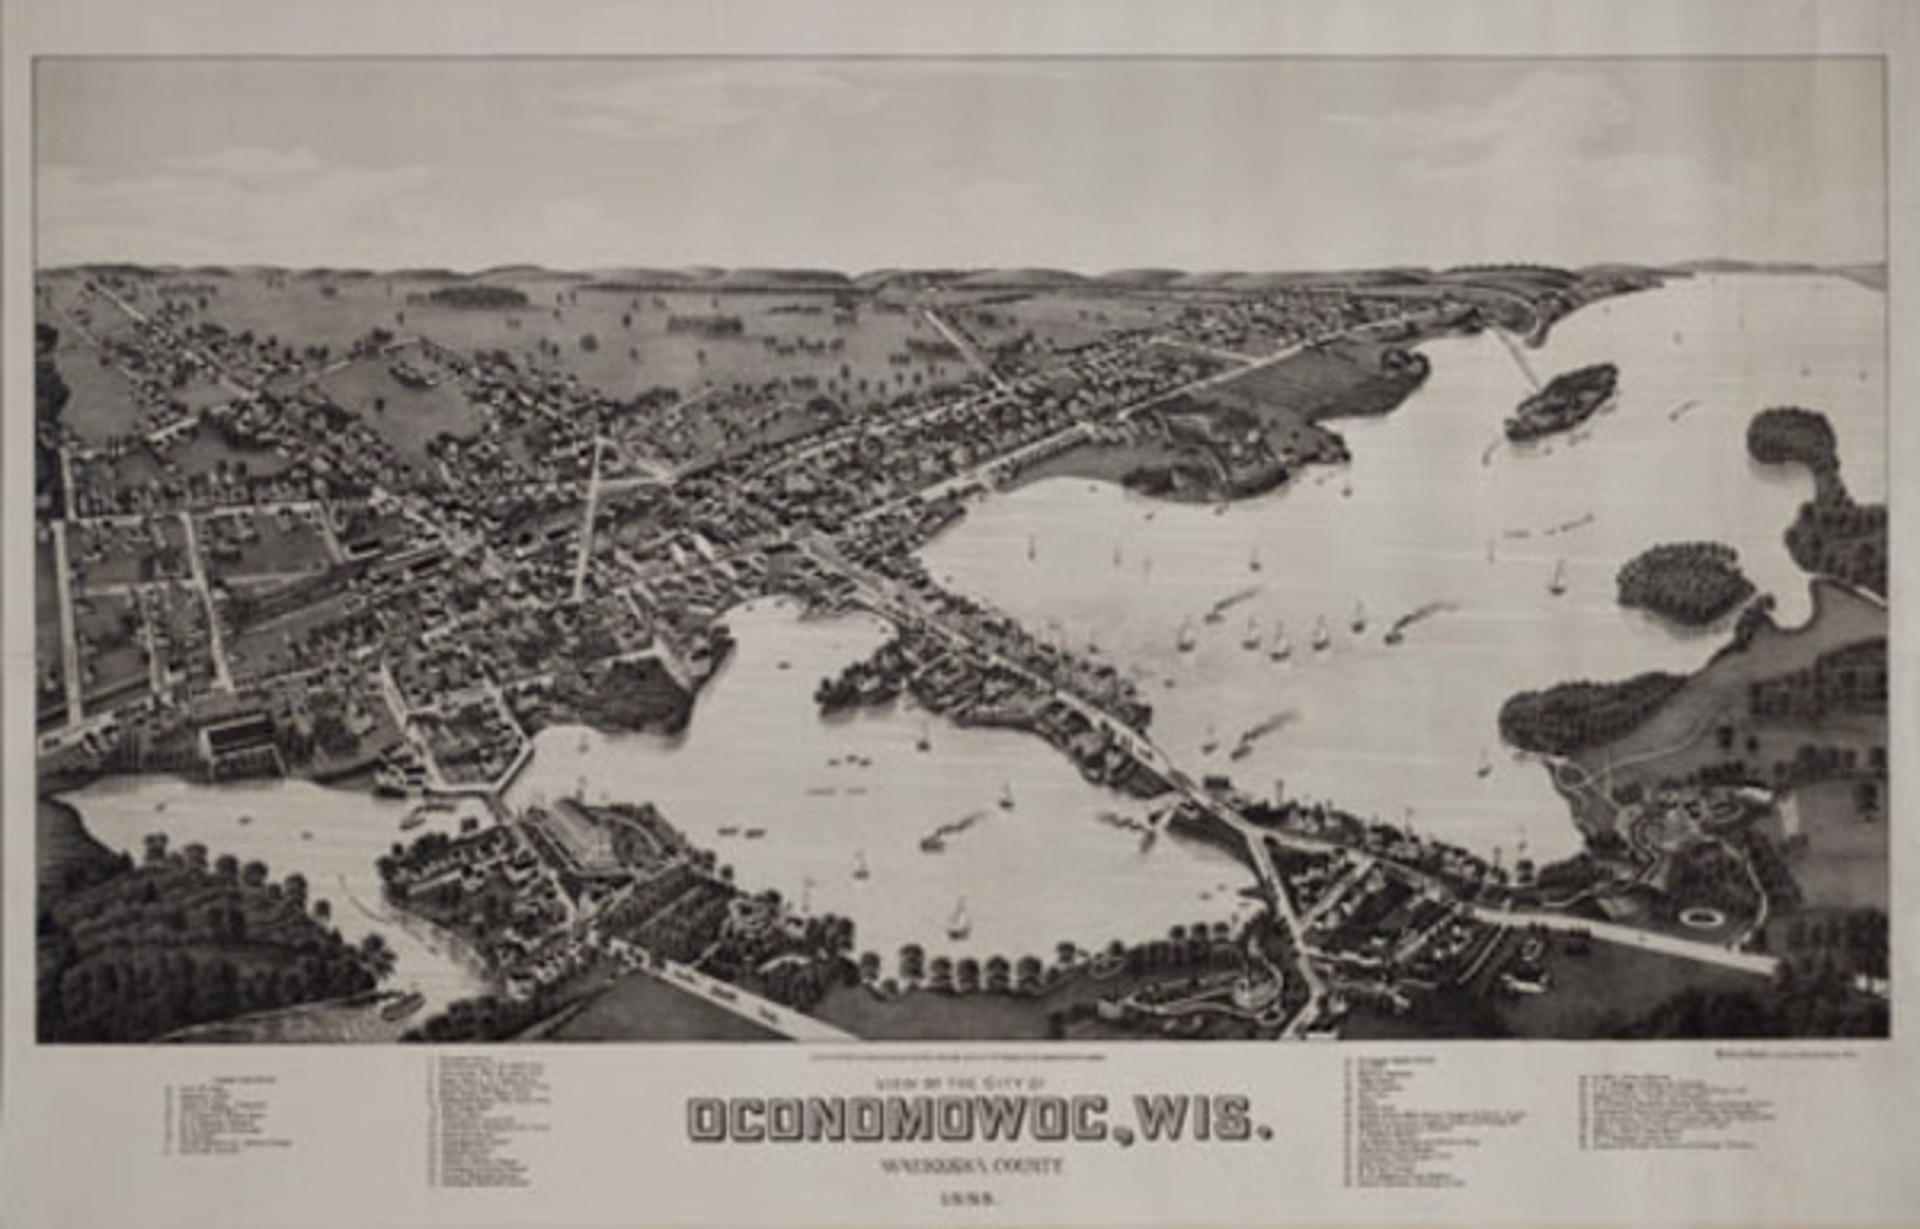 View of the City of Oconomowoc, WI, Waukesha Co. 1885 by Beck & Pauli